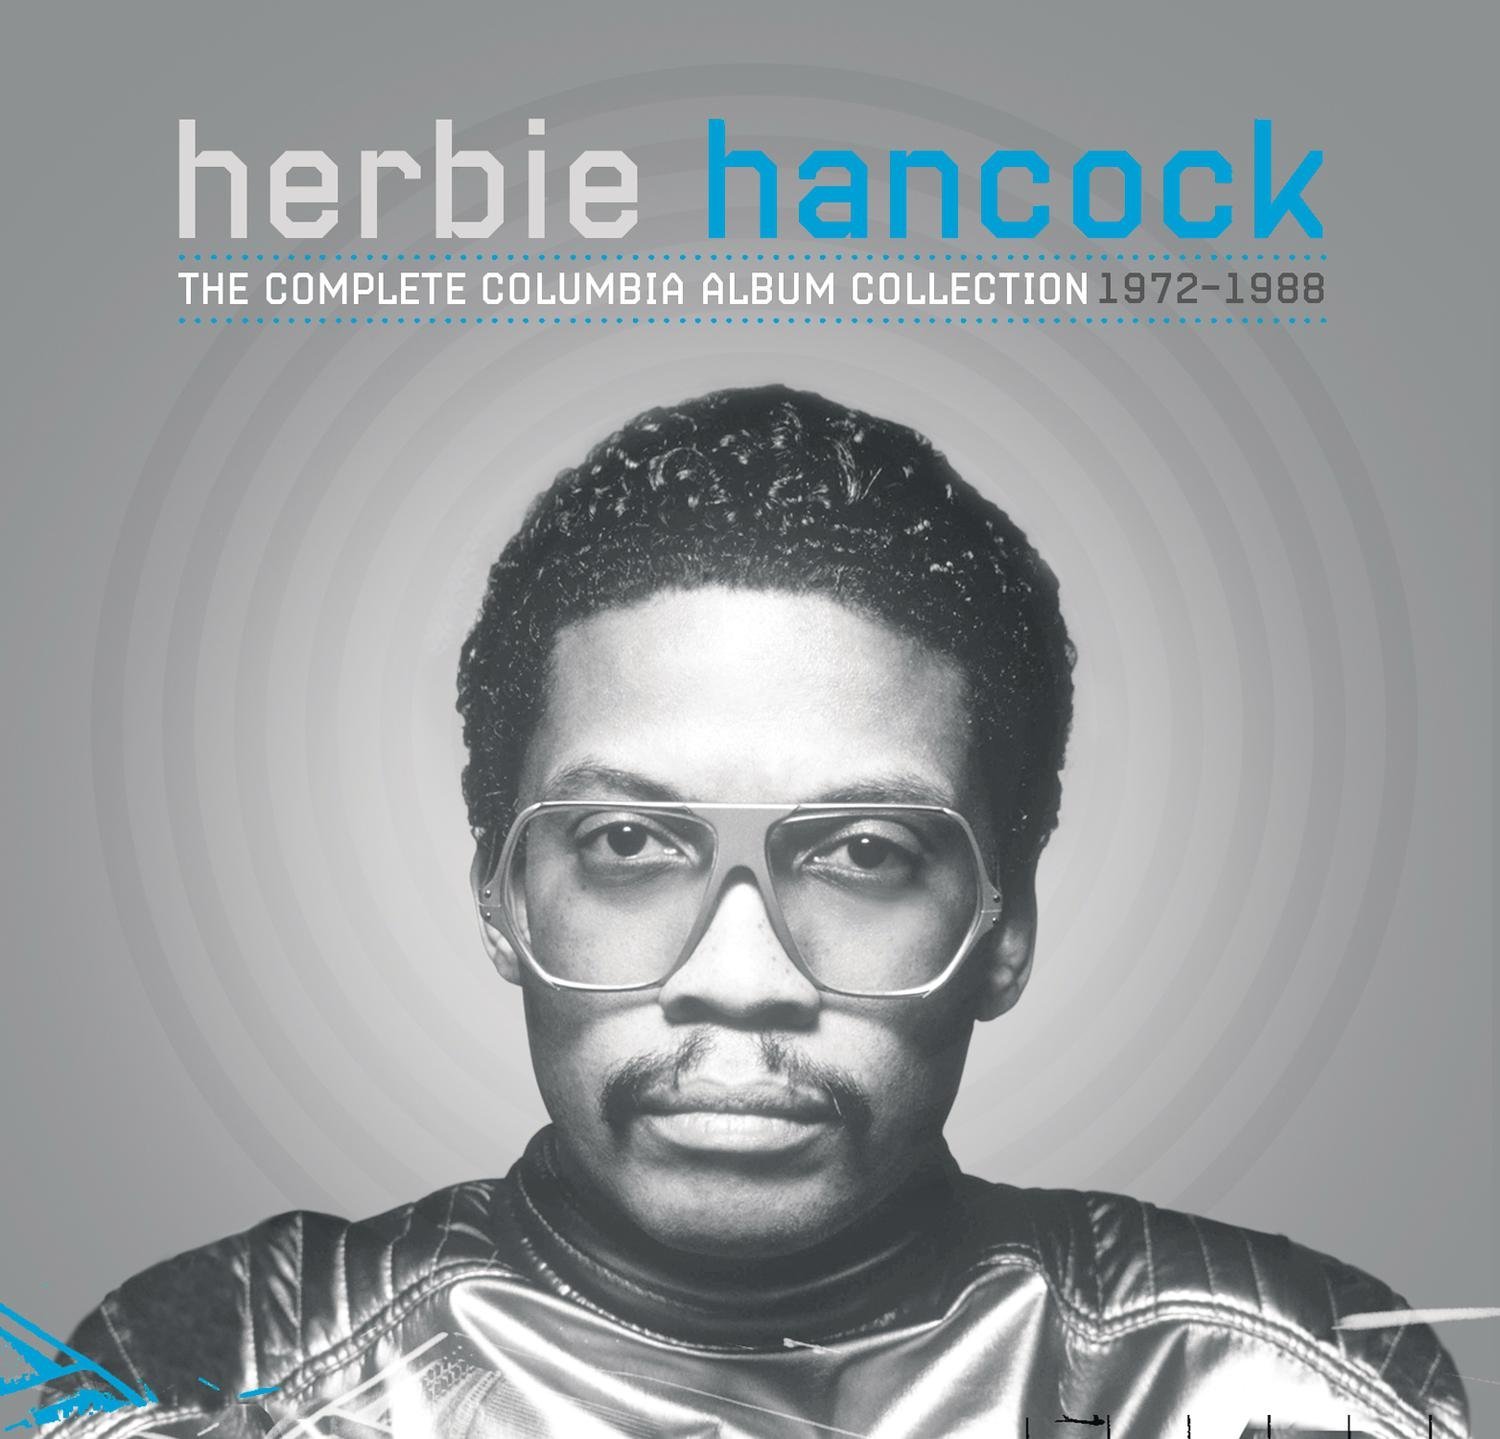 Herbie Hancock wallpaper, Music, HQ Herbie Hancock pictureK Wallpaper 2019